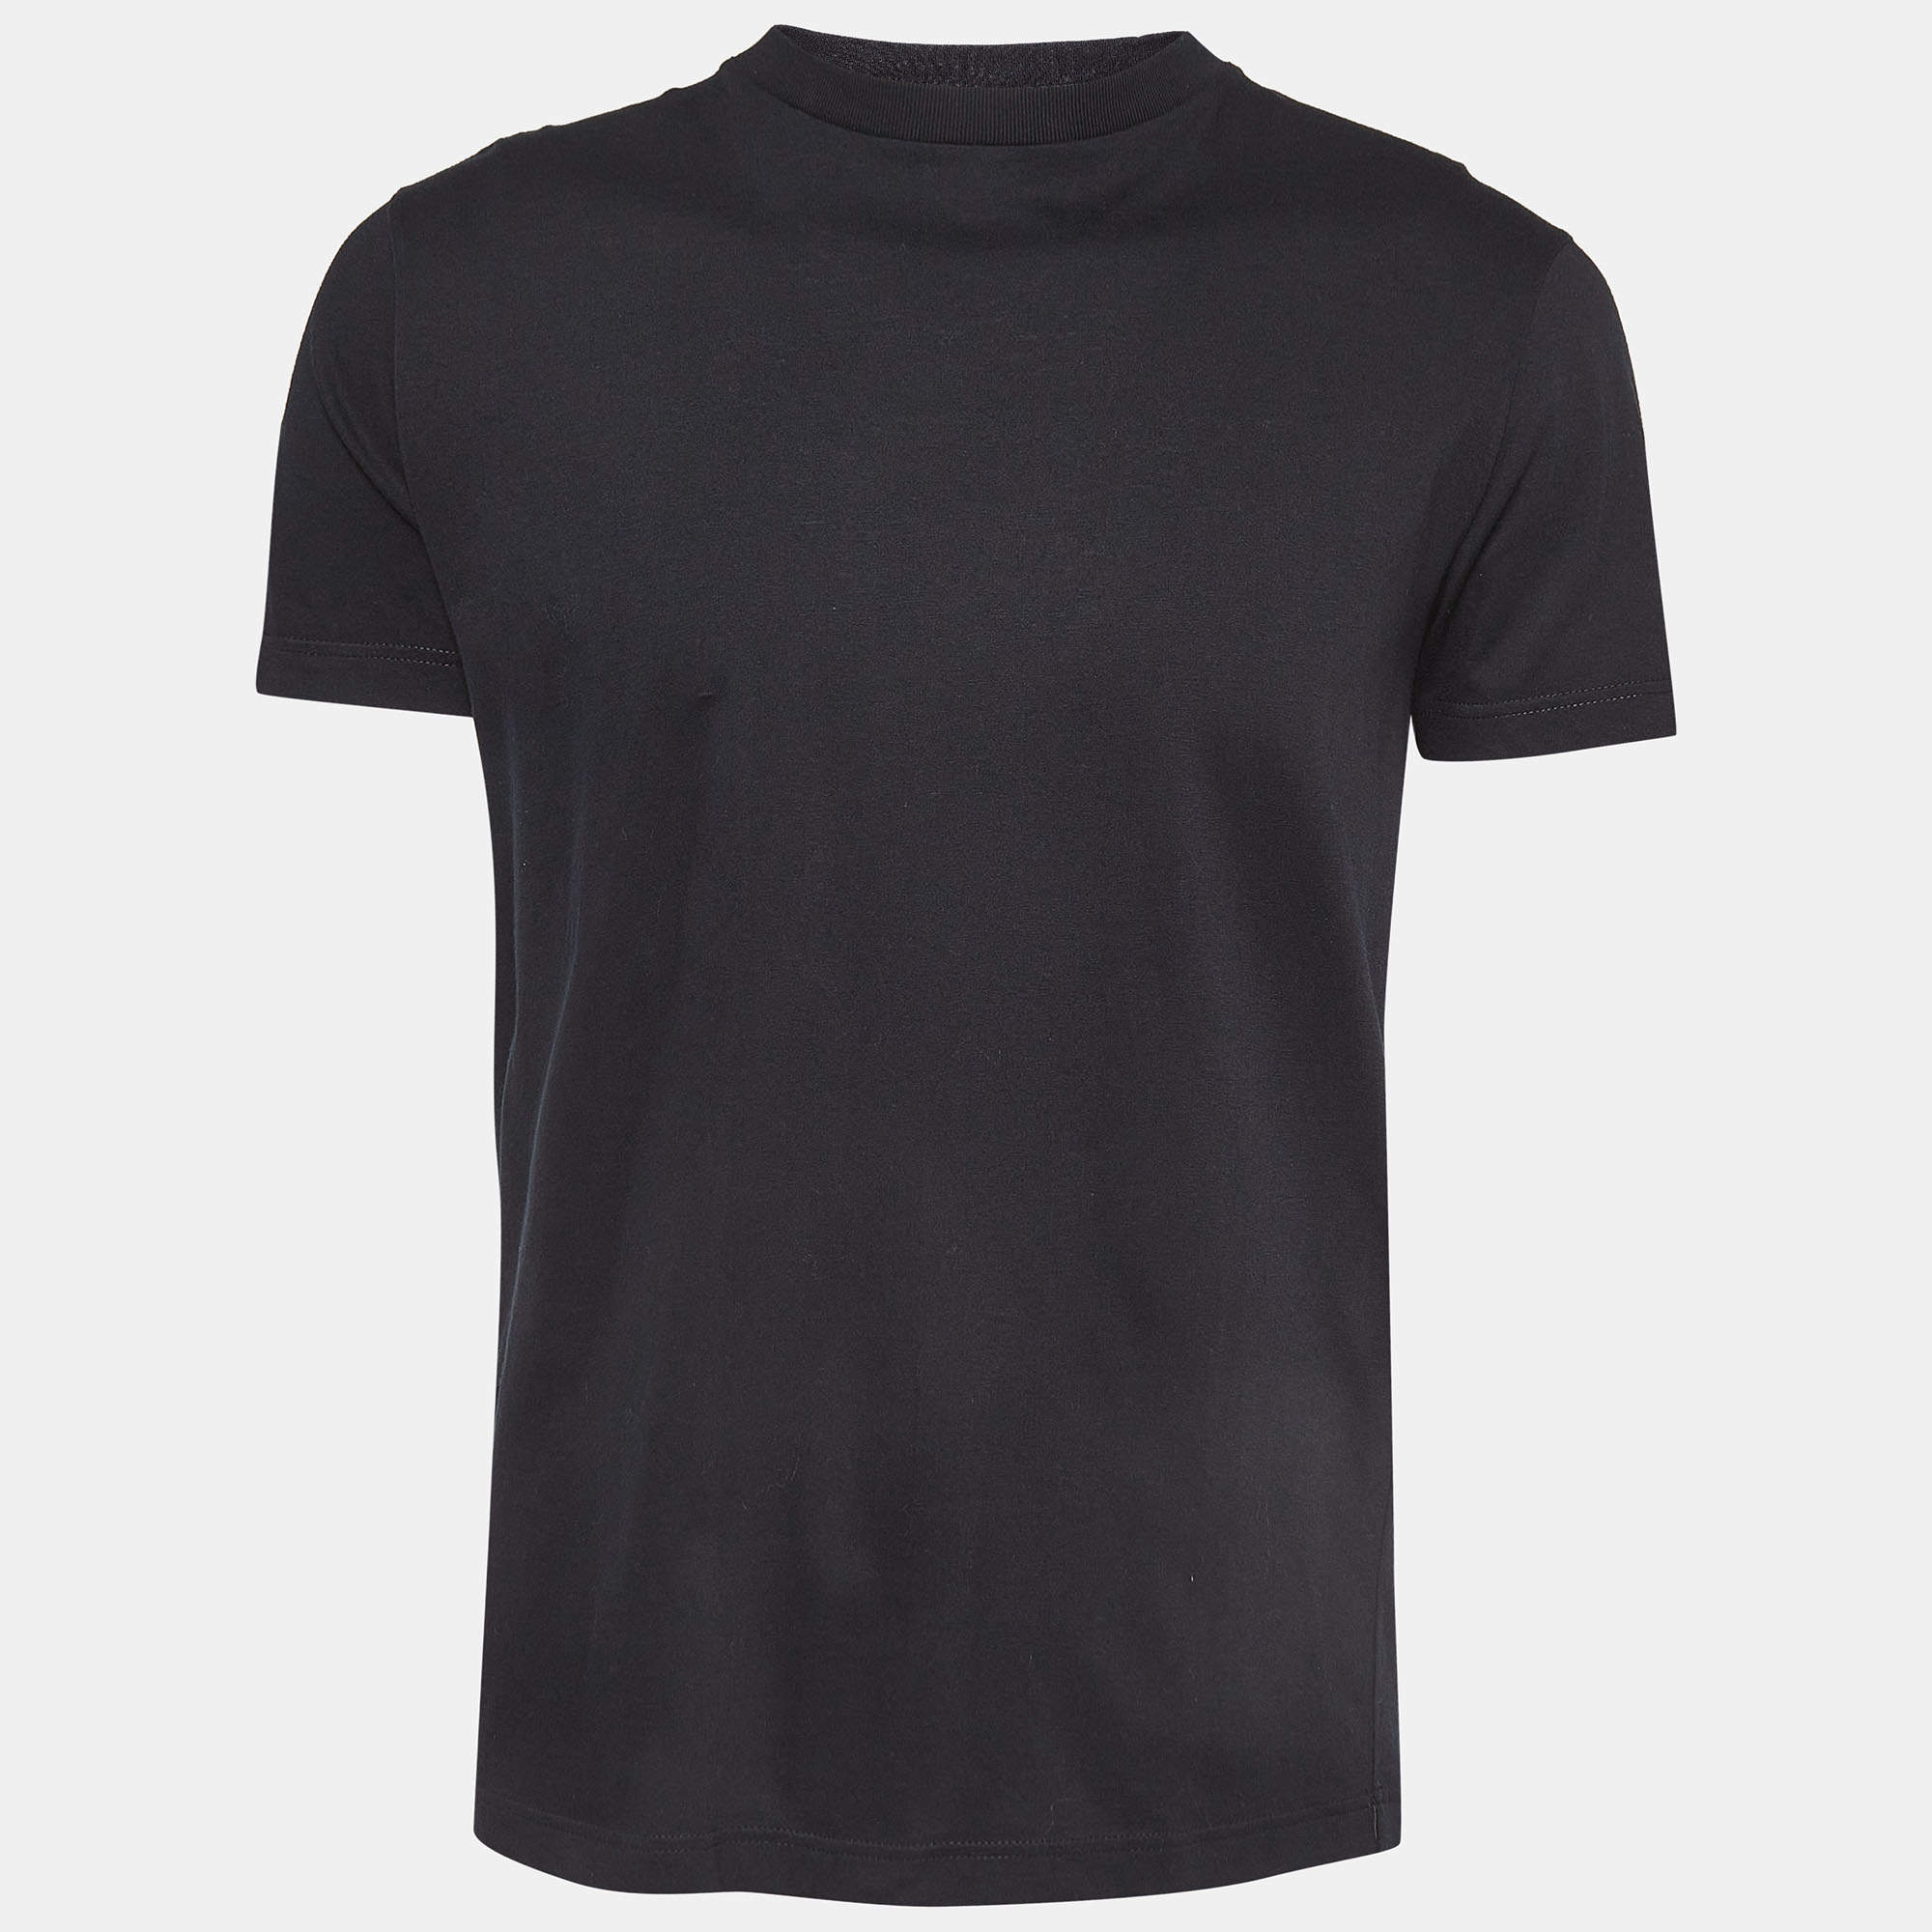 Prada Black Cotton Crew Neck T-Shirt L